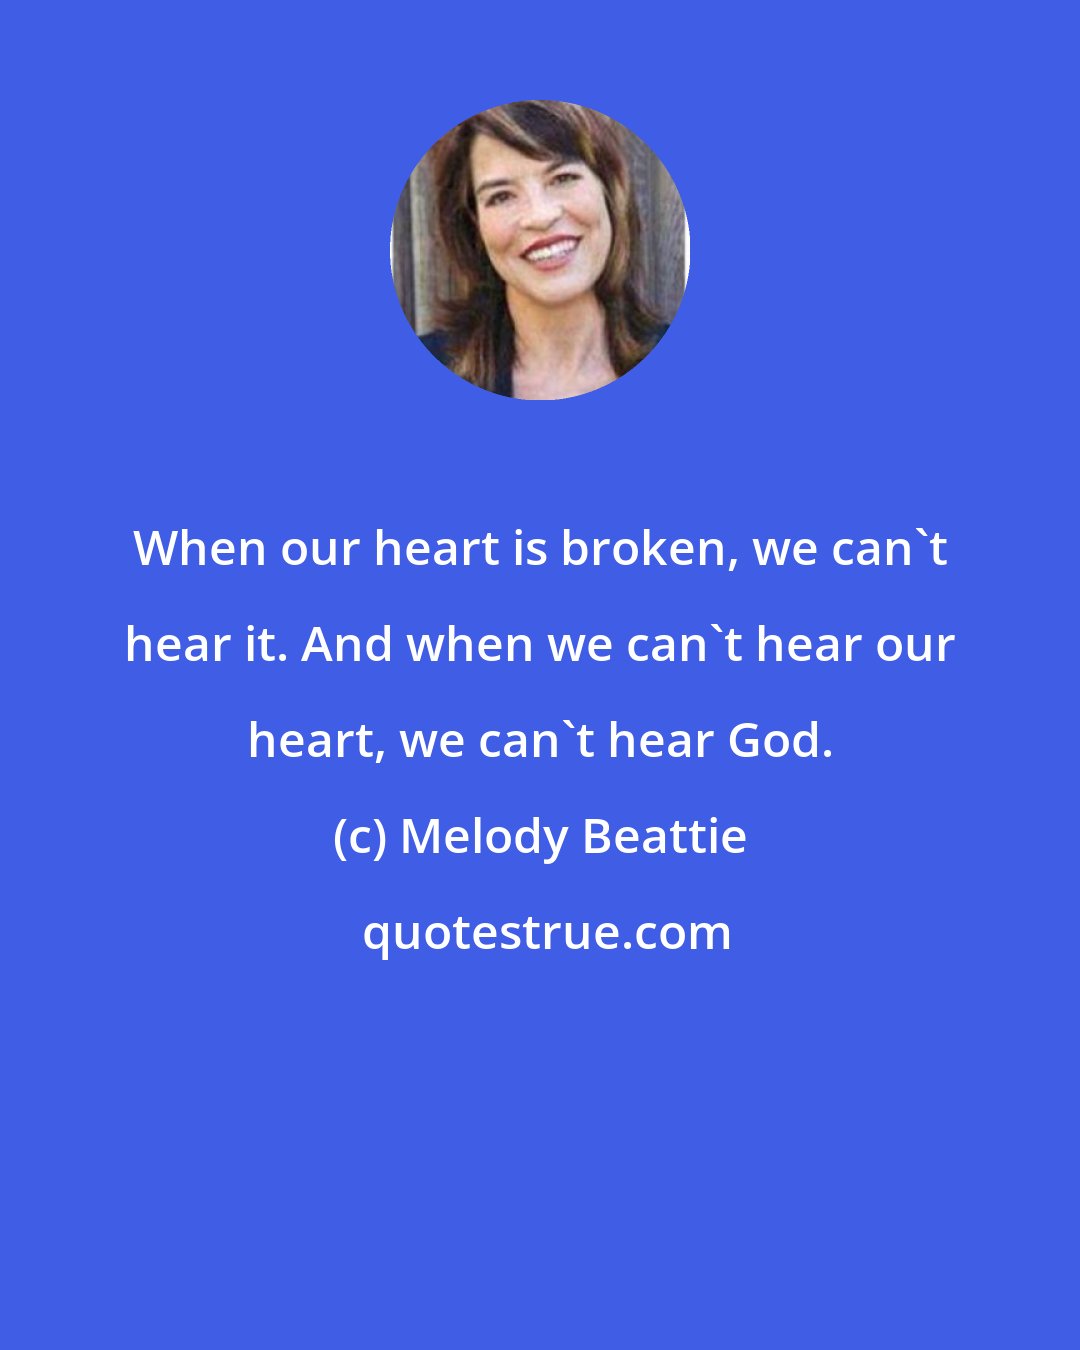 Melody Beattie: When our heart is broken, we can't hear it. And when we can't hear our heart, we can't hear God.